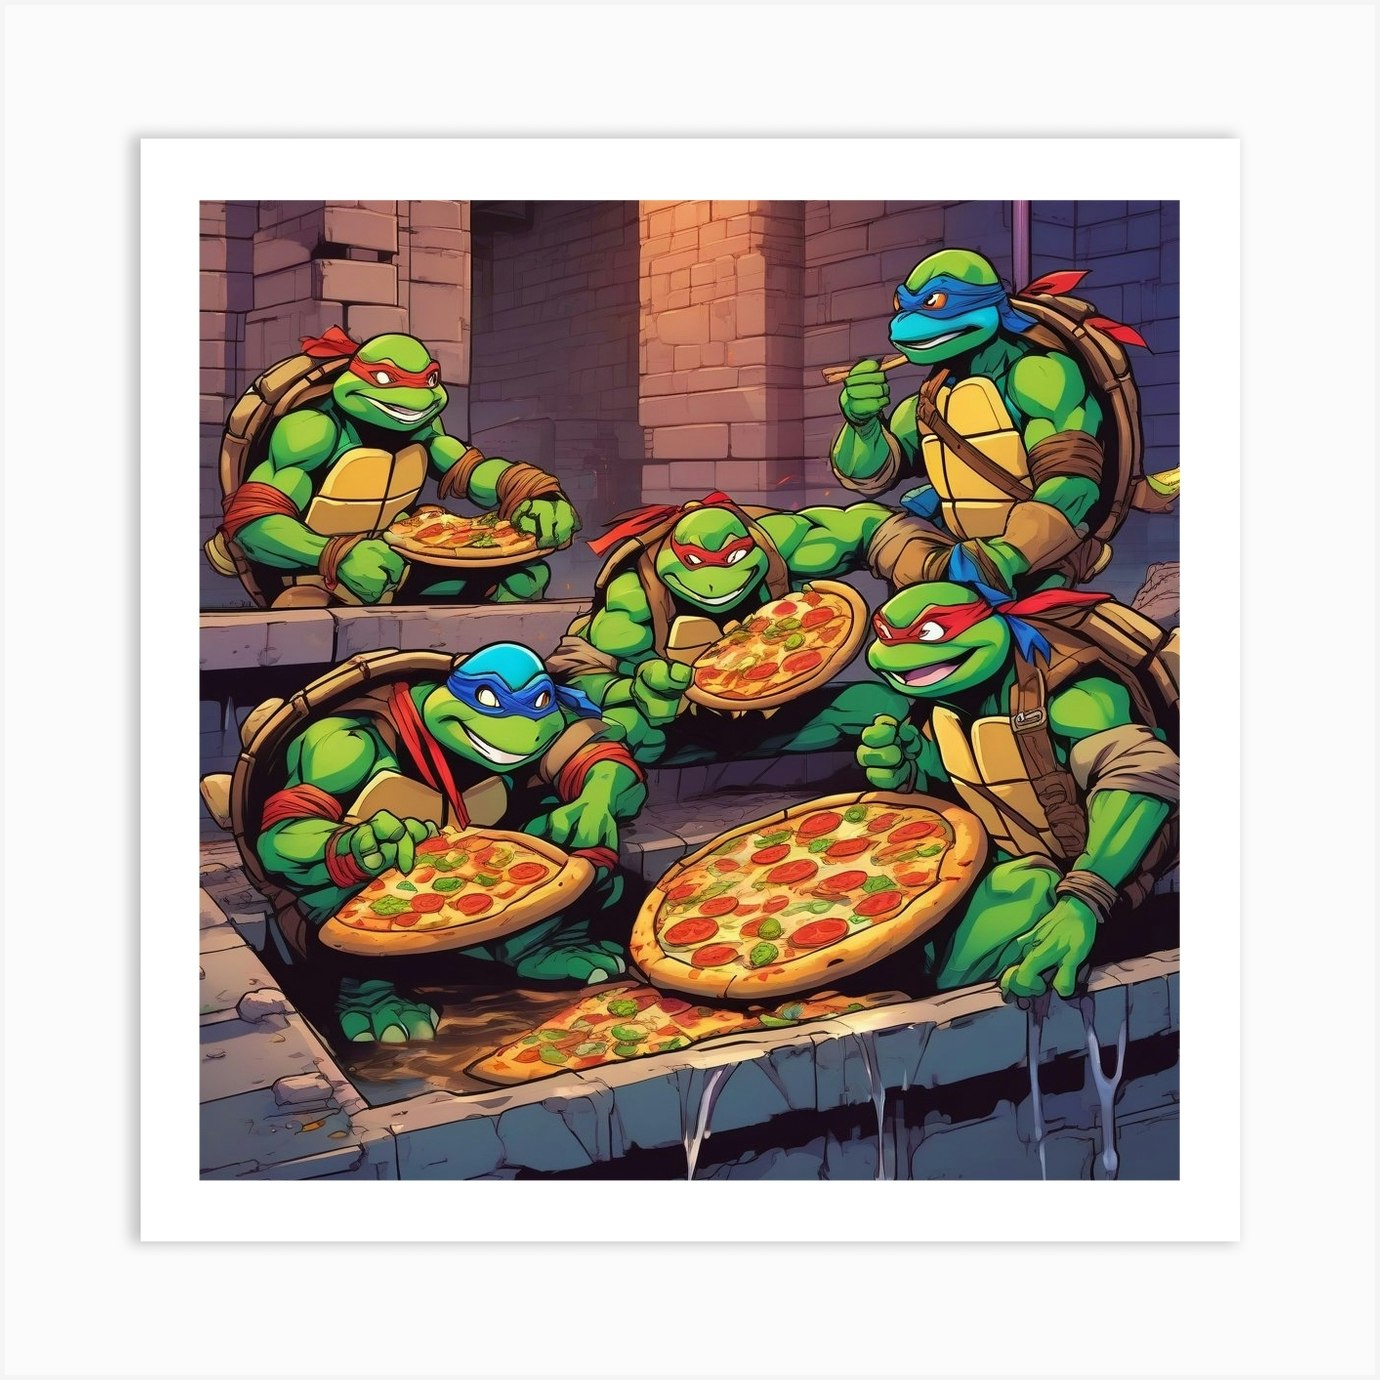 Teenage Mutant Ninja Turtles Michelangelo Ceramic Bowl